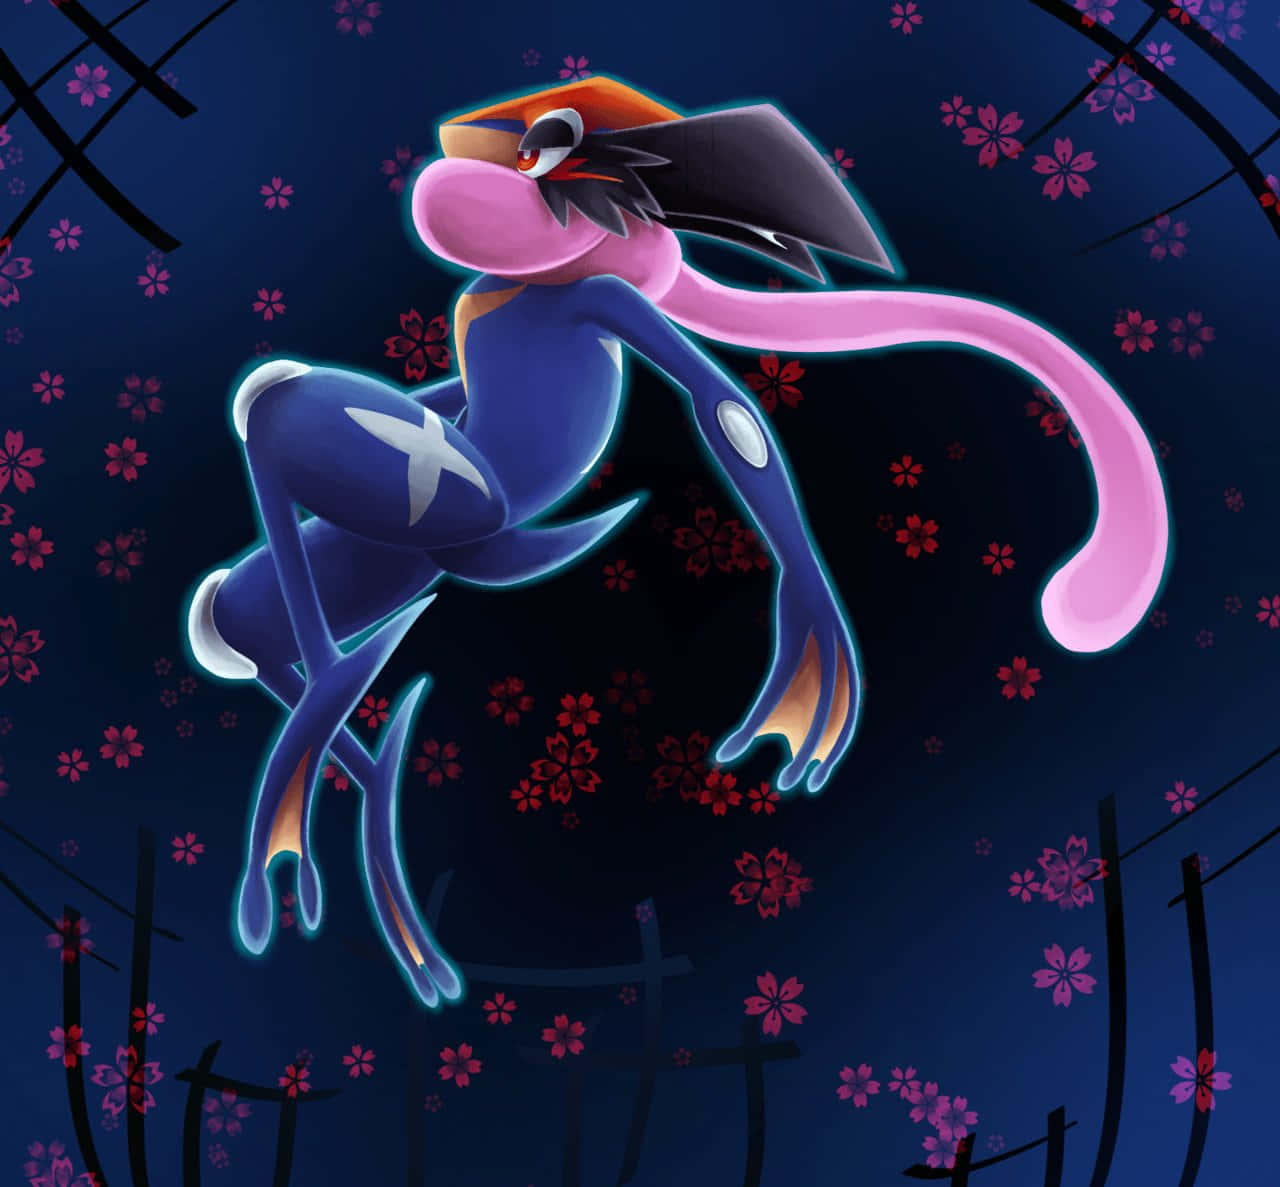 Greninja, the Mythical Ninja Pokemon